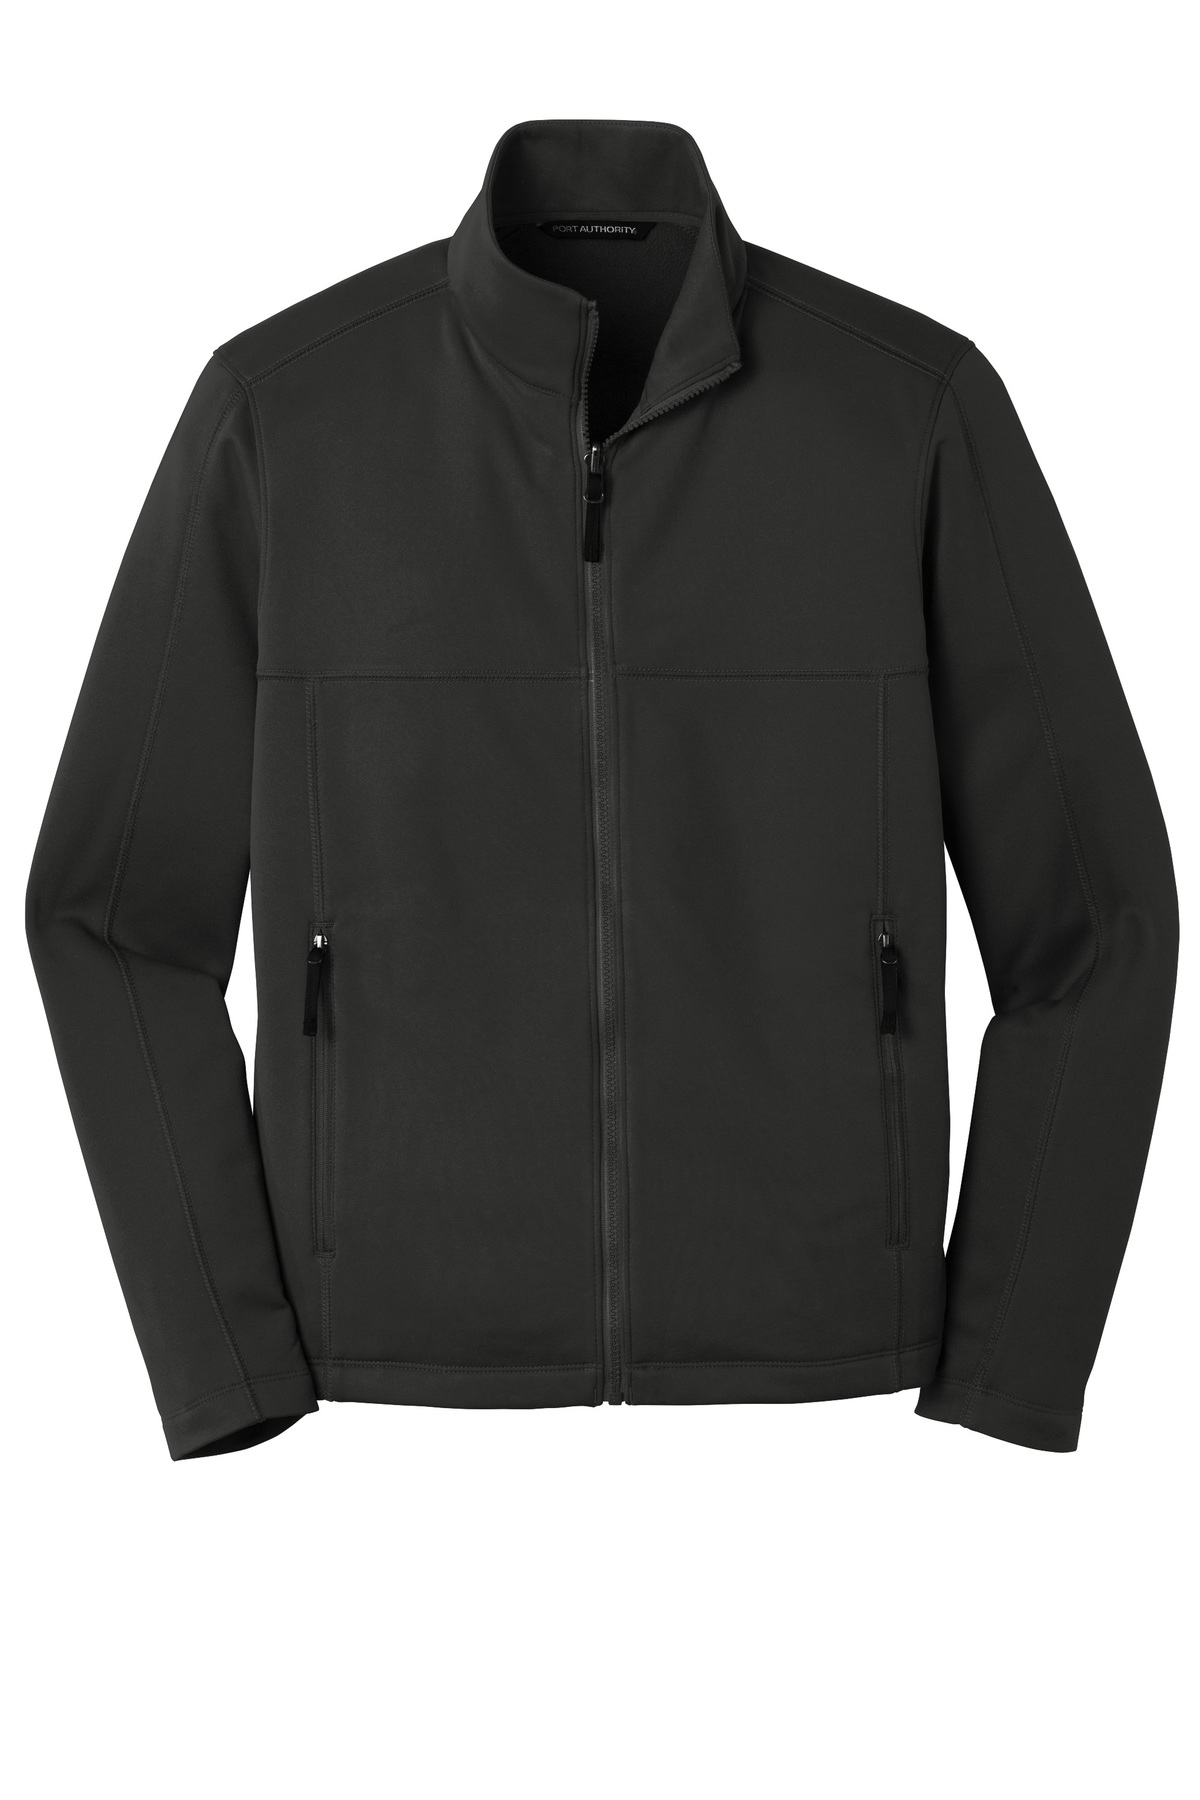 Port Authority Collective Smooth Fleece Jacket | Product | SanMar